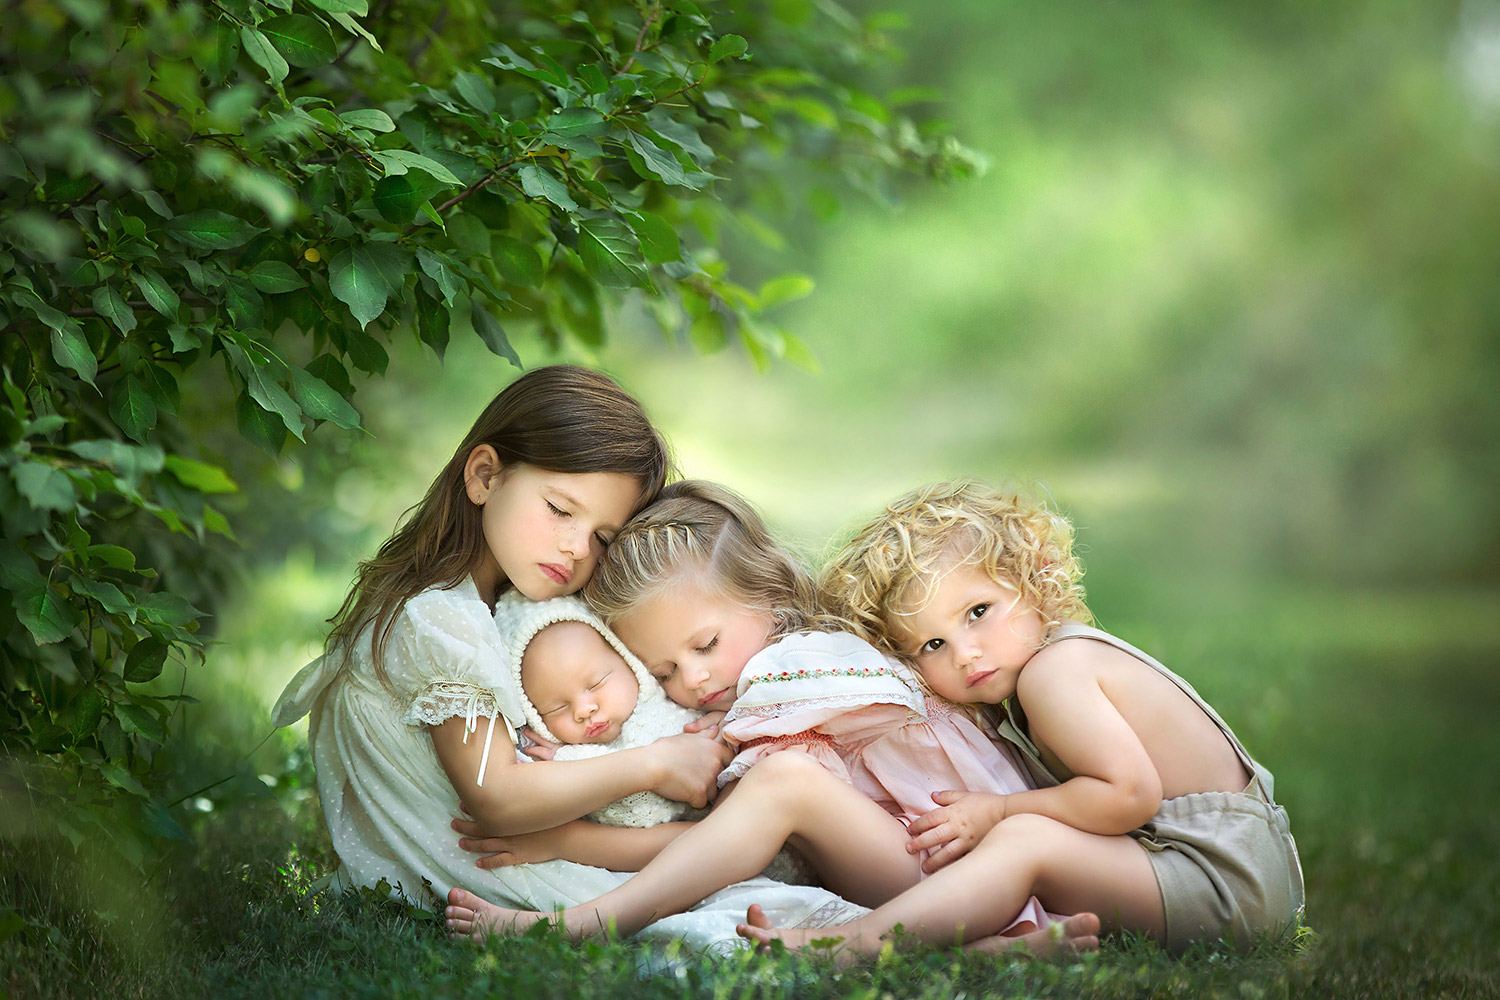 Then there were four, © Cassandra Jones, Canada, Newborns Photo Contest